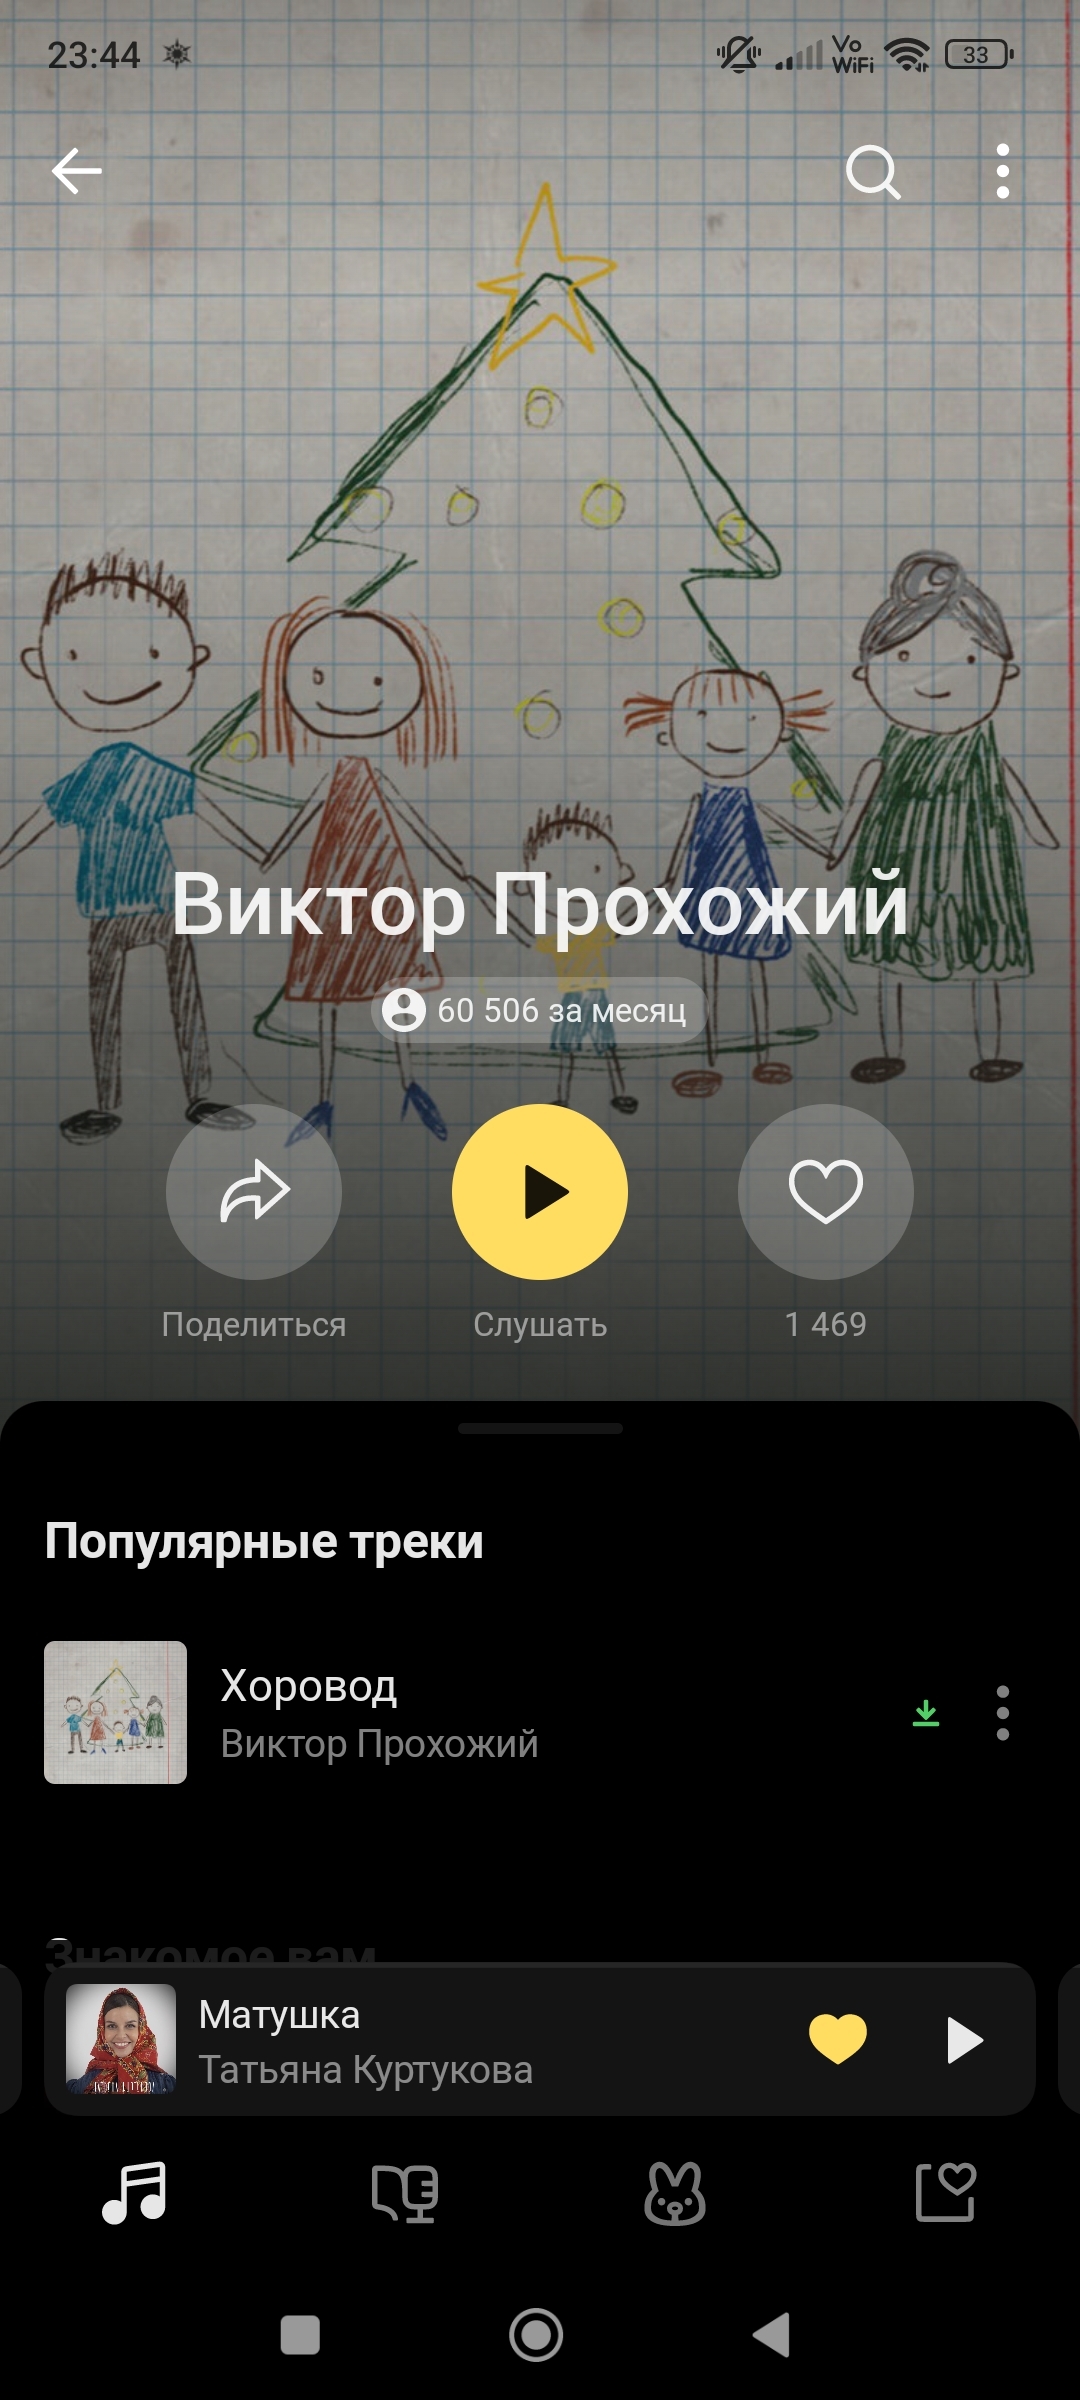 Yandex.music - Music, Victor Passerby, Longpost